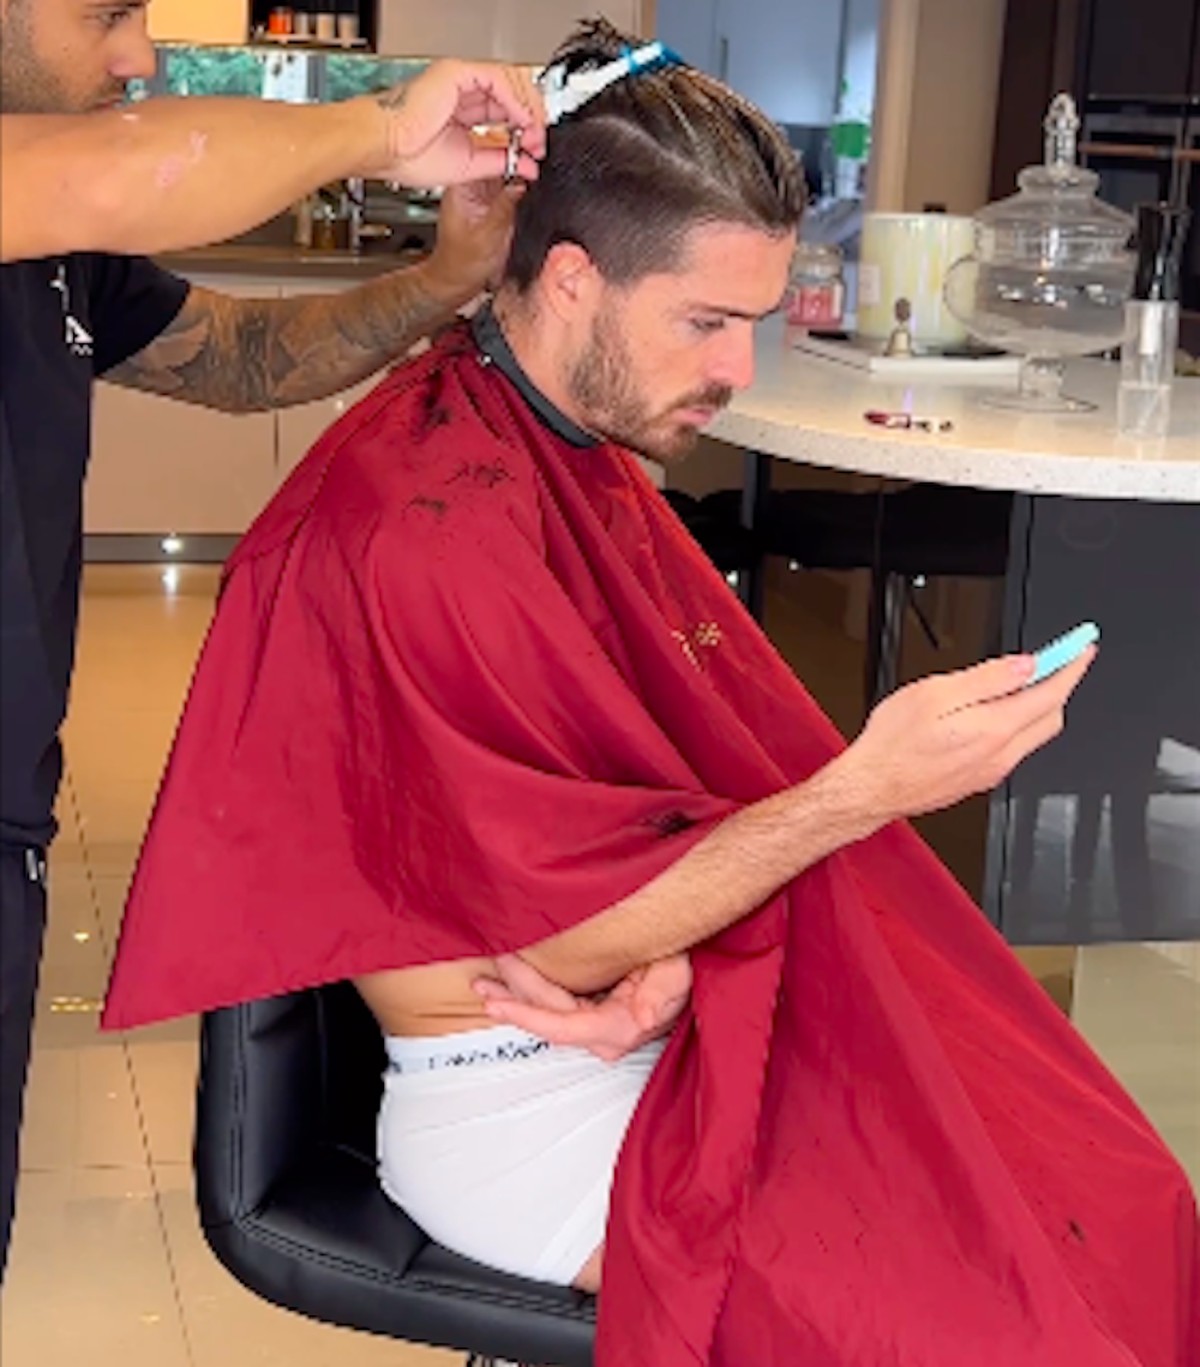 The English Premier League star becomes an Internet joke when he cuts his hair in his underwear |  Sports